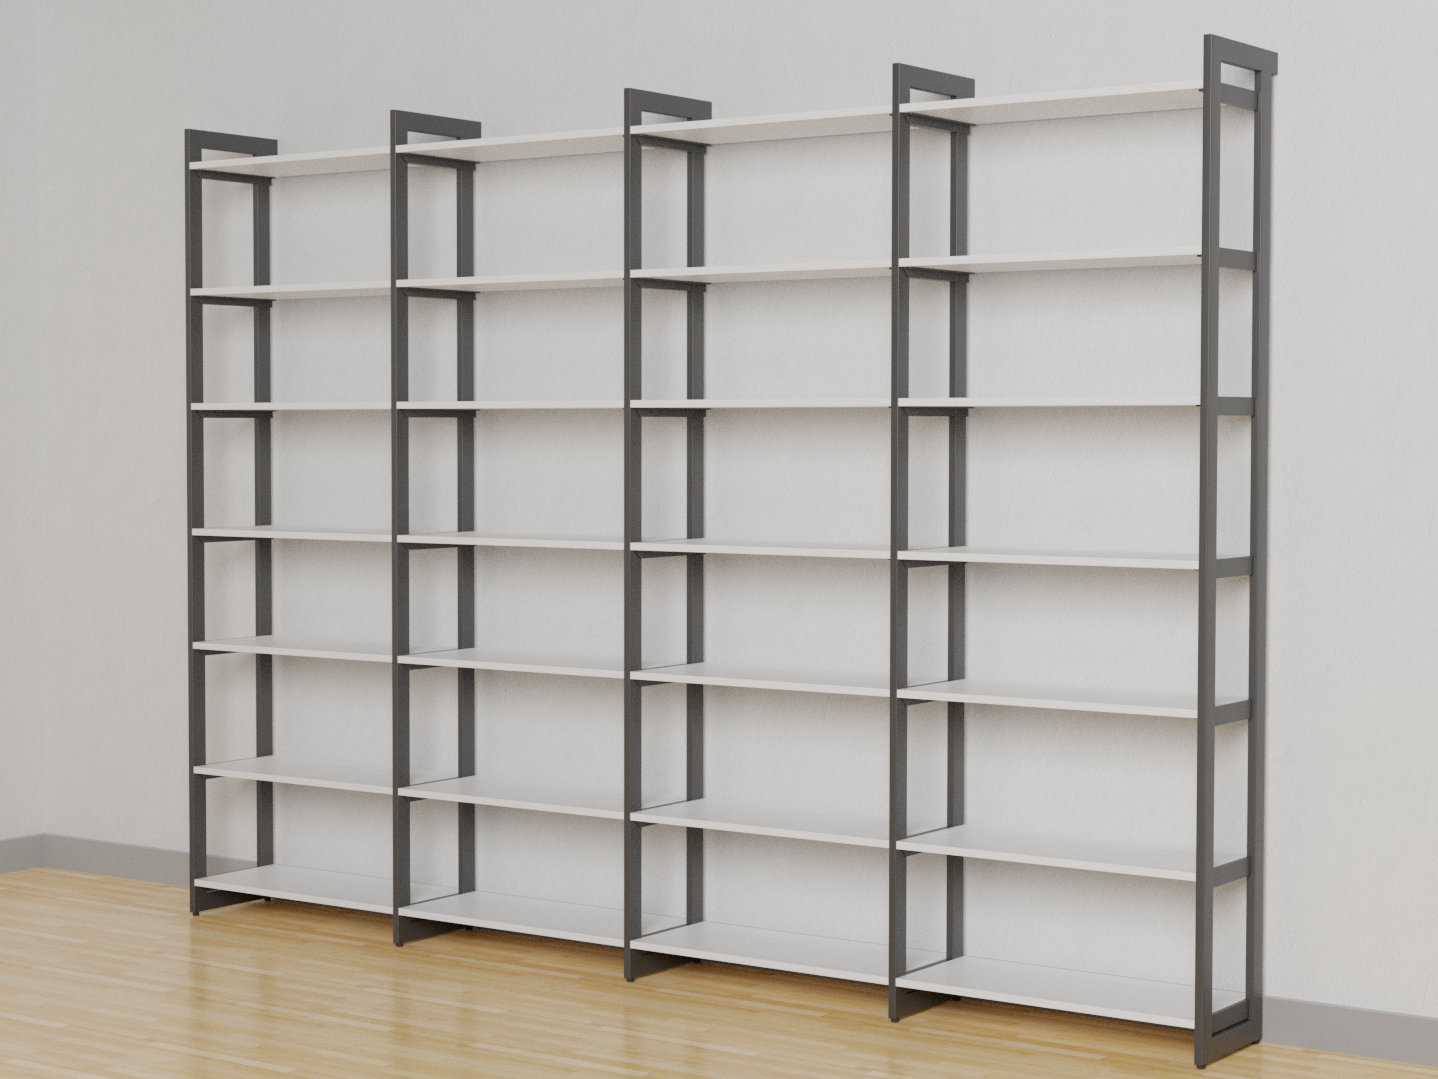 Life Story 13.2 in. x 27.75 in. Classic Gray 3 Shelf Storage